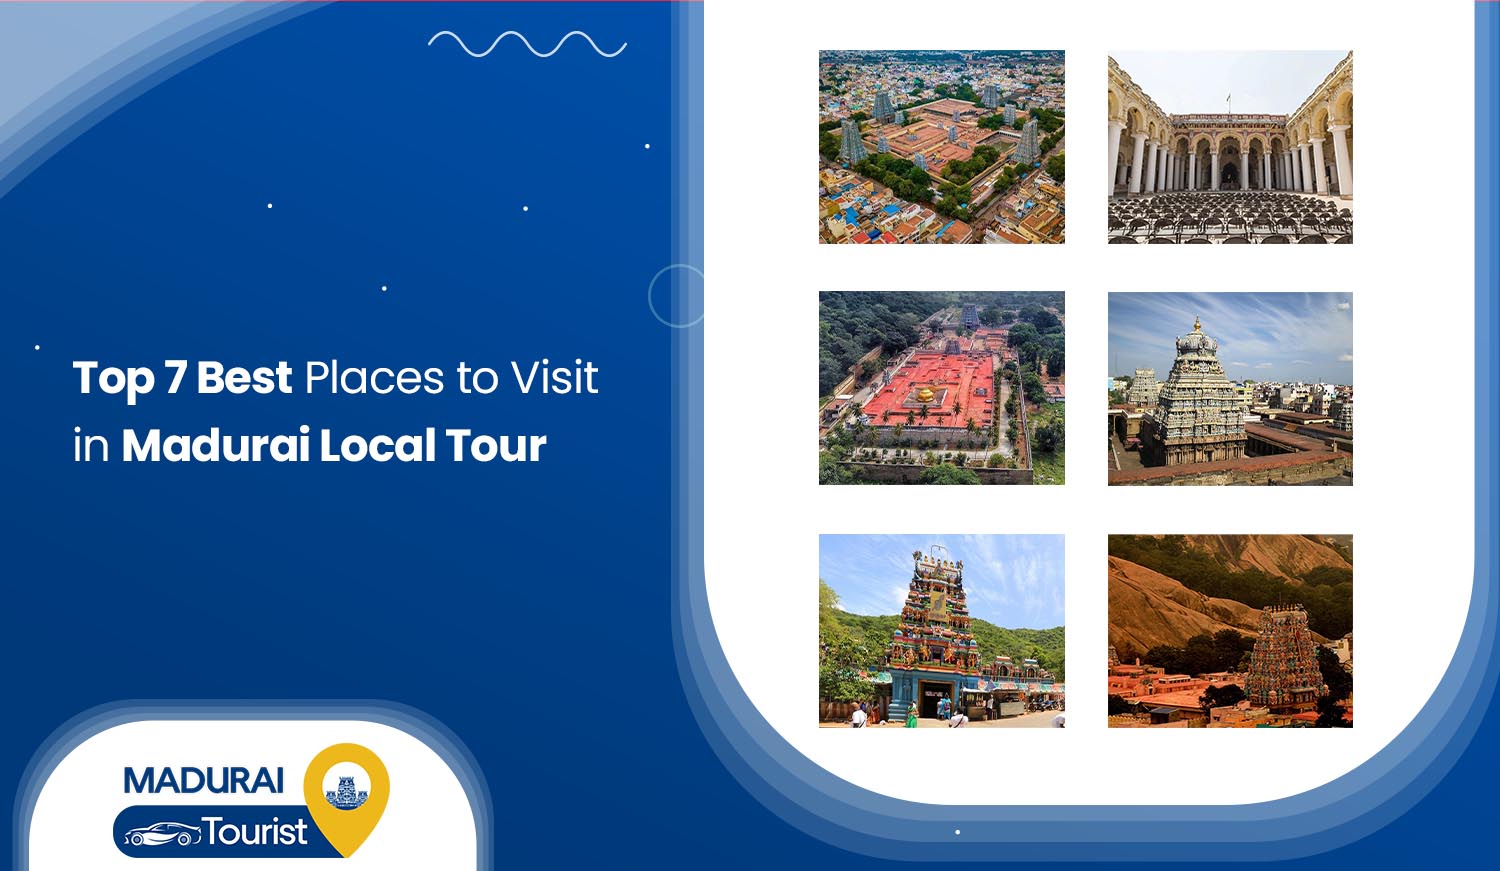 Top 7 Best Places To Visit In Madurai Local Tour - Madurai Tourist